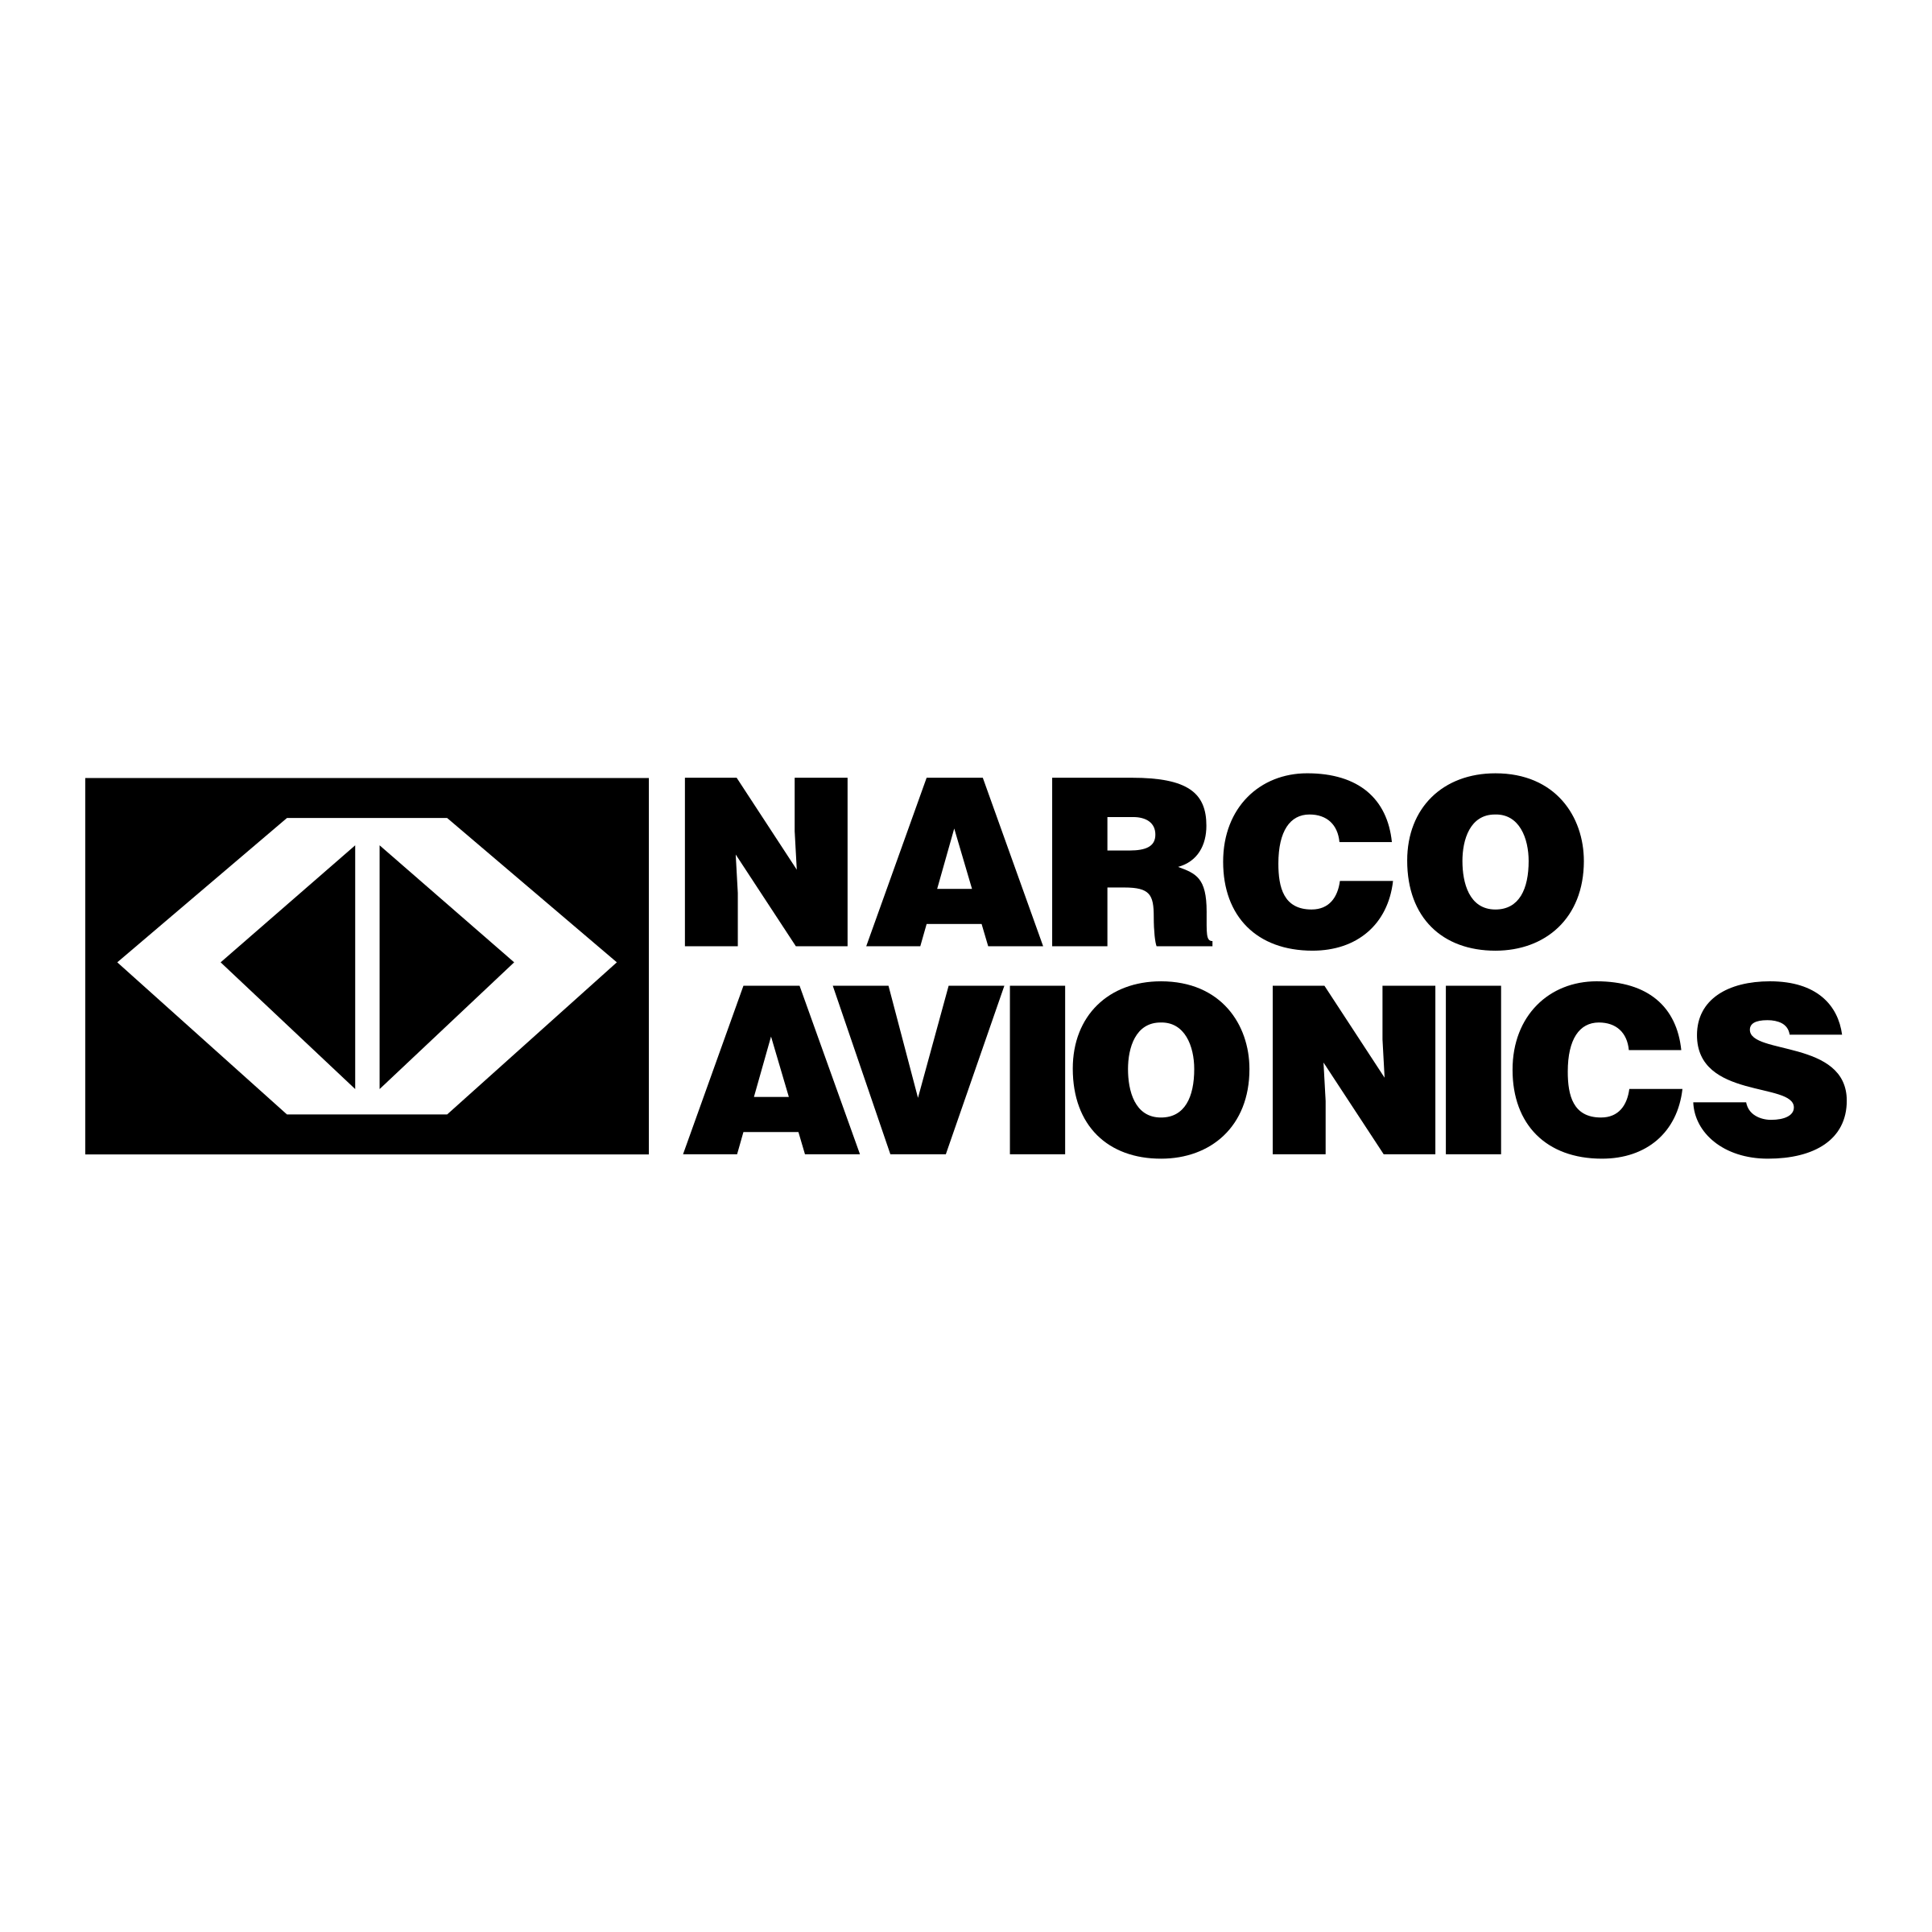 Avionics Logo - Narco Avionics Logo PNG Transparent & SVG Vector - Freebie Supply